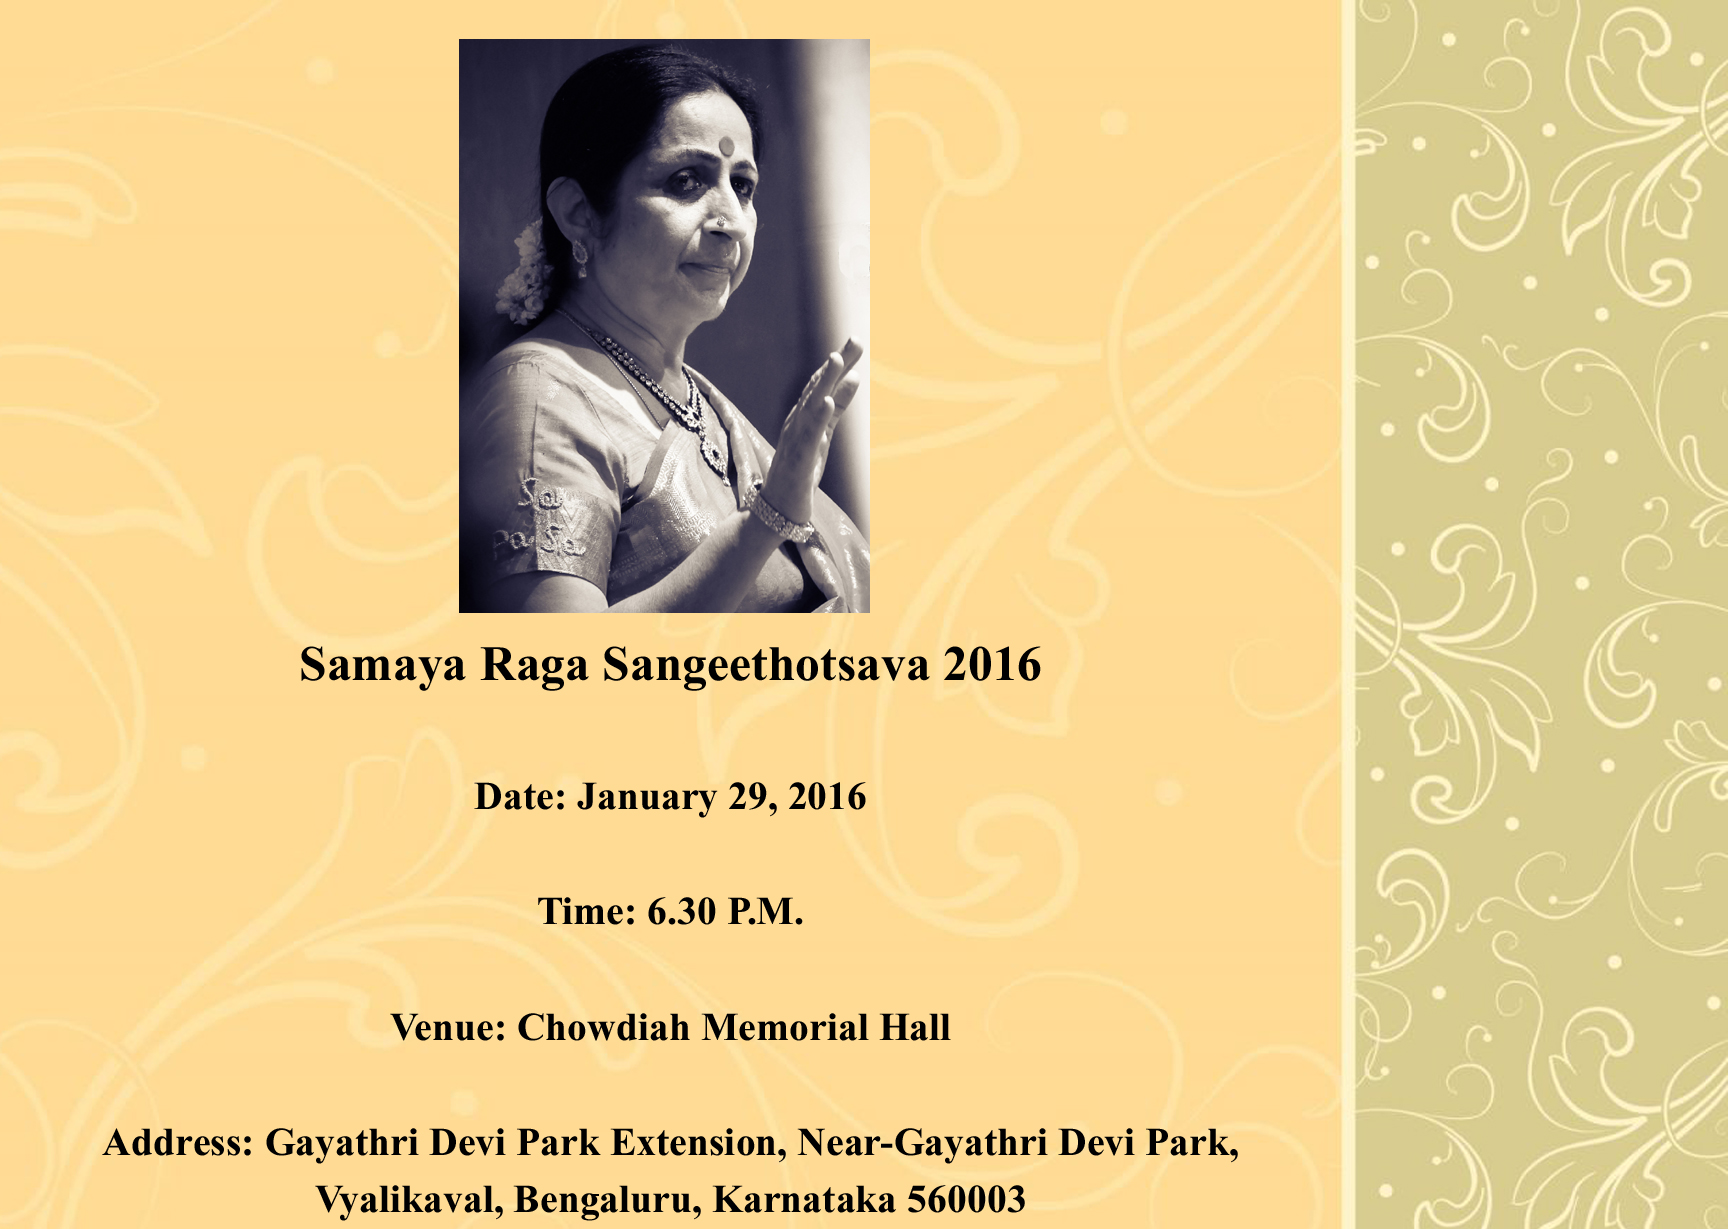 Concert of Aruna Sairam - Samaya Raga Sangeethotsava 2016